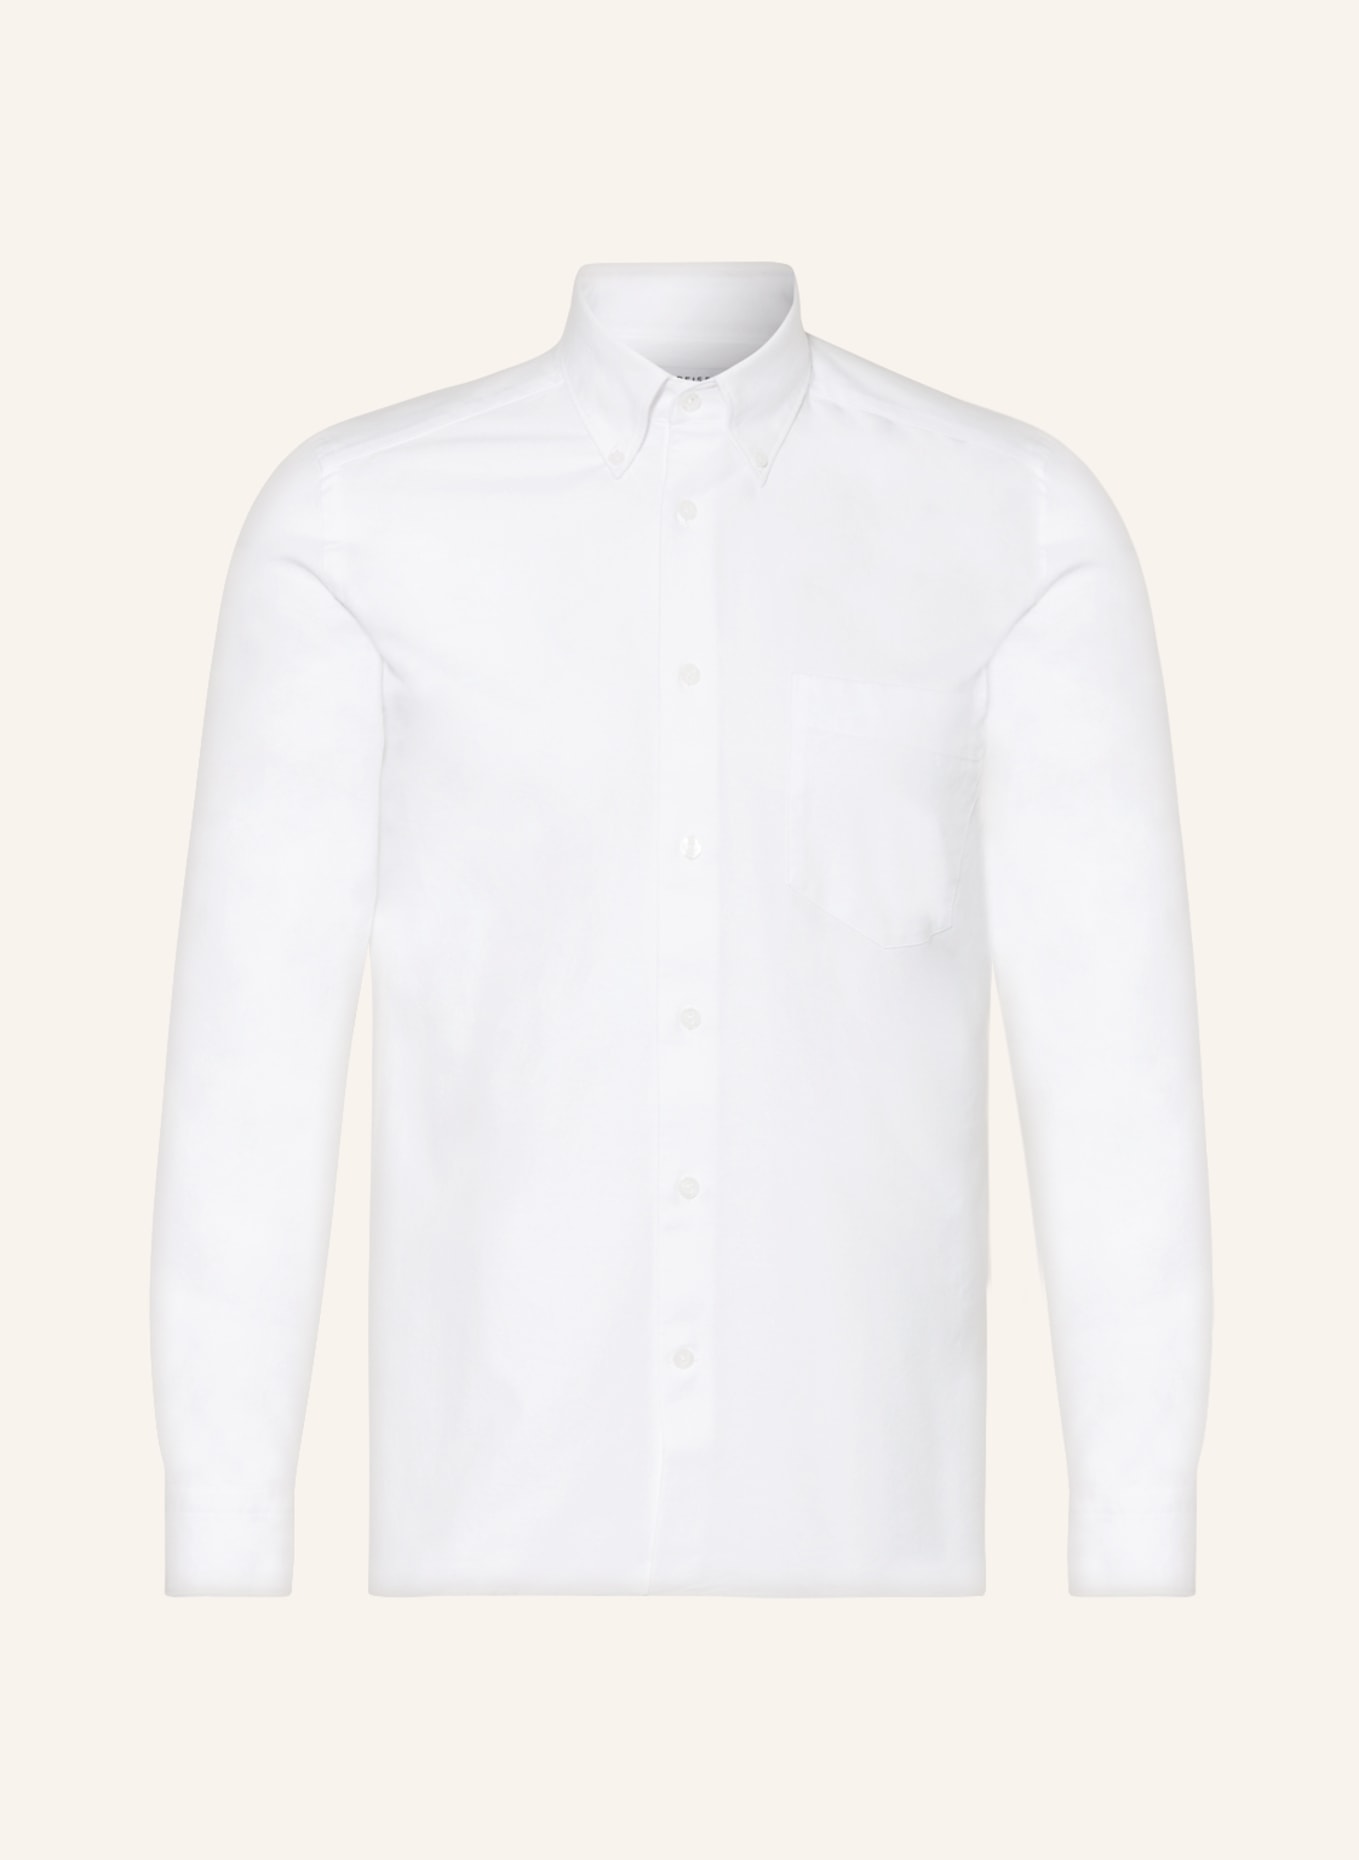 REISS Oxfordhemd GREENWICH Slim Fit, Farbe: WEISS (Bild 1)